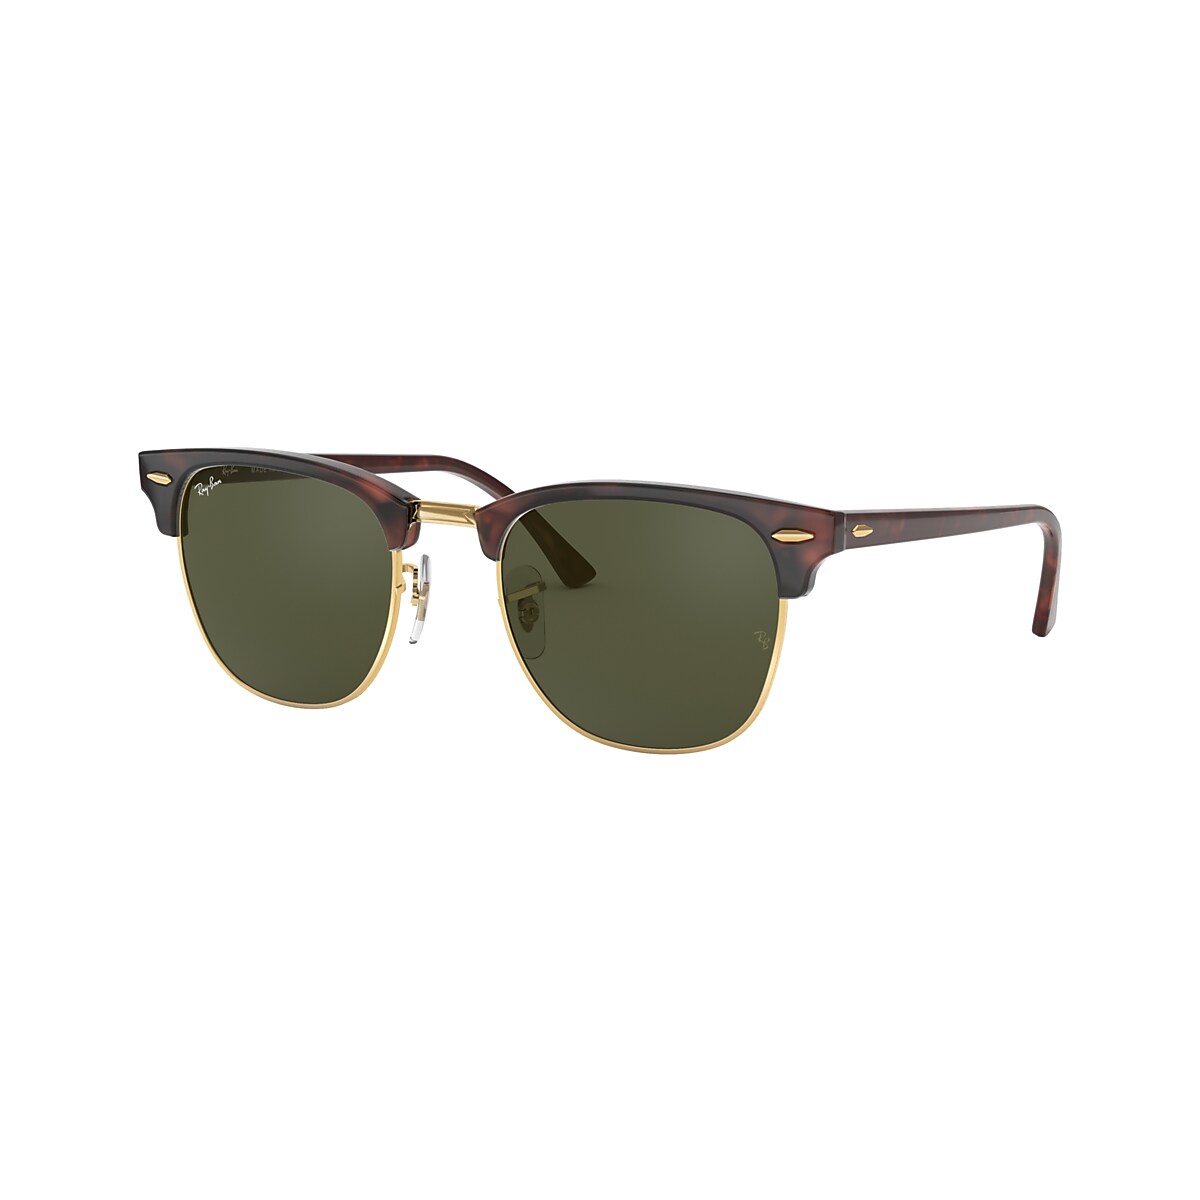 Ray-Ban RB3016 Clubmaster Classic 51 Green & Tortoise On Gold Sunglasses |  Sunglass Hut United Kingdom